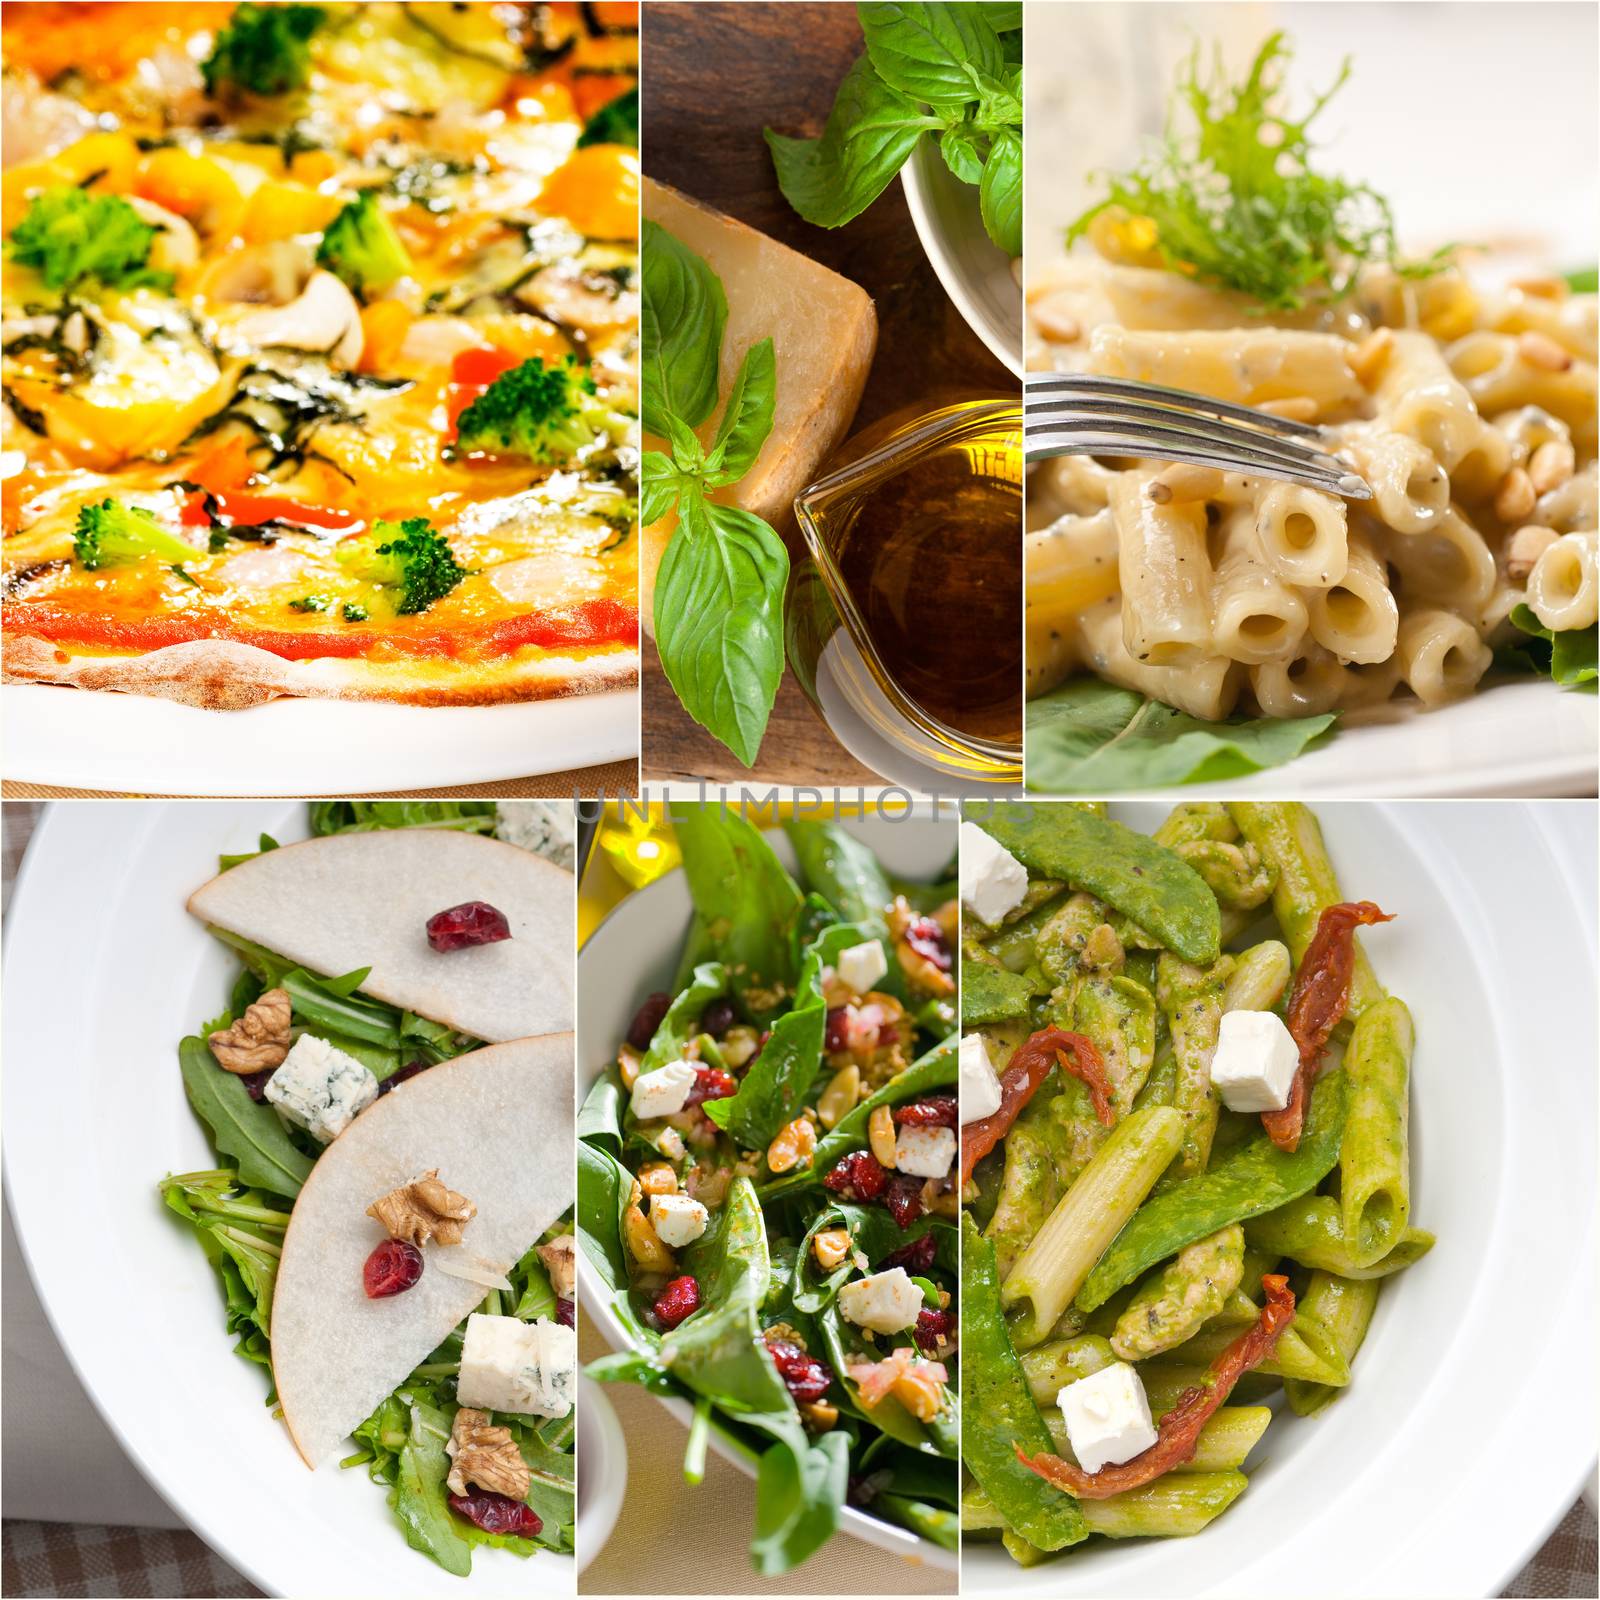 healthy and tasty Italian food collage by keko64